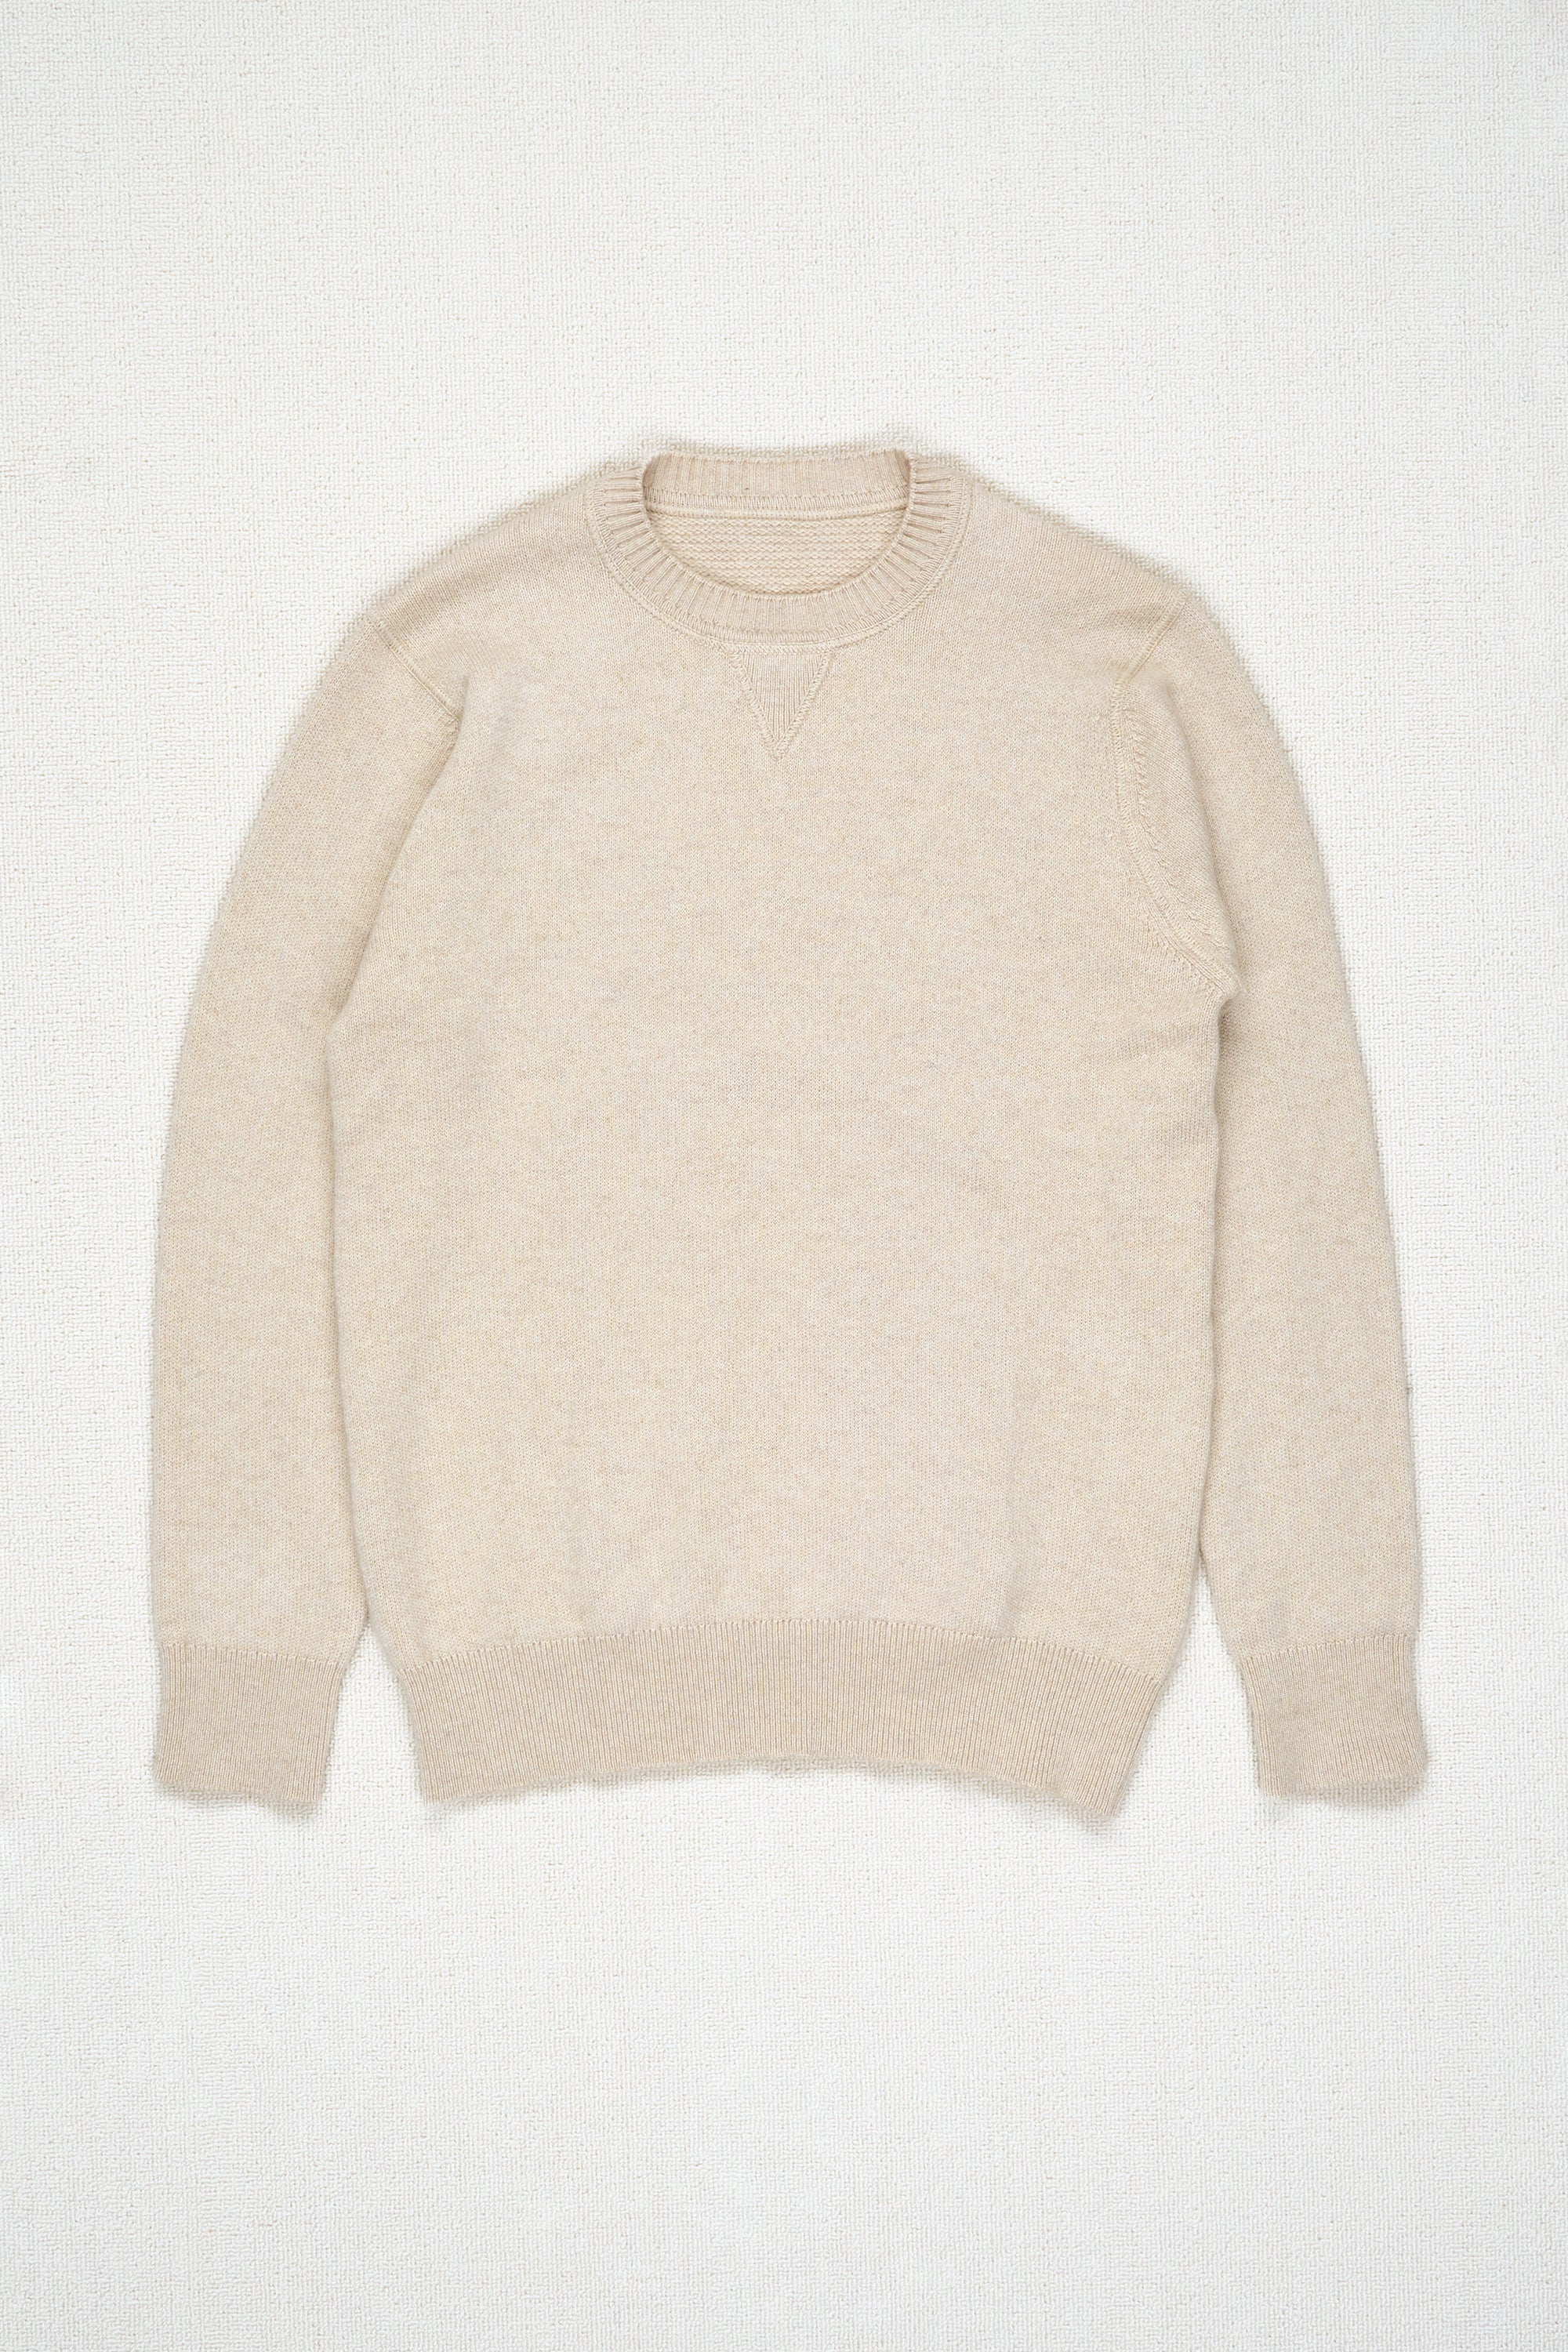 The Armoury Oatmeal Cashmere Sweatshirt *sample*